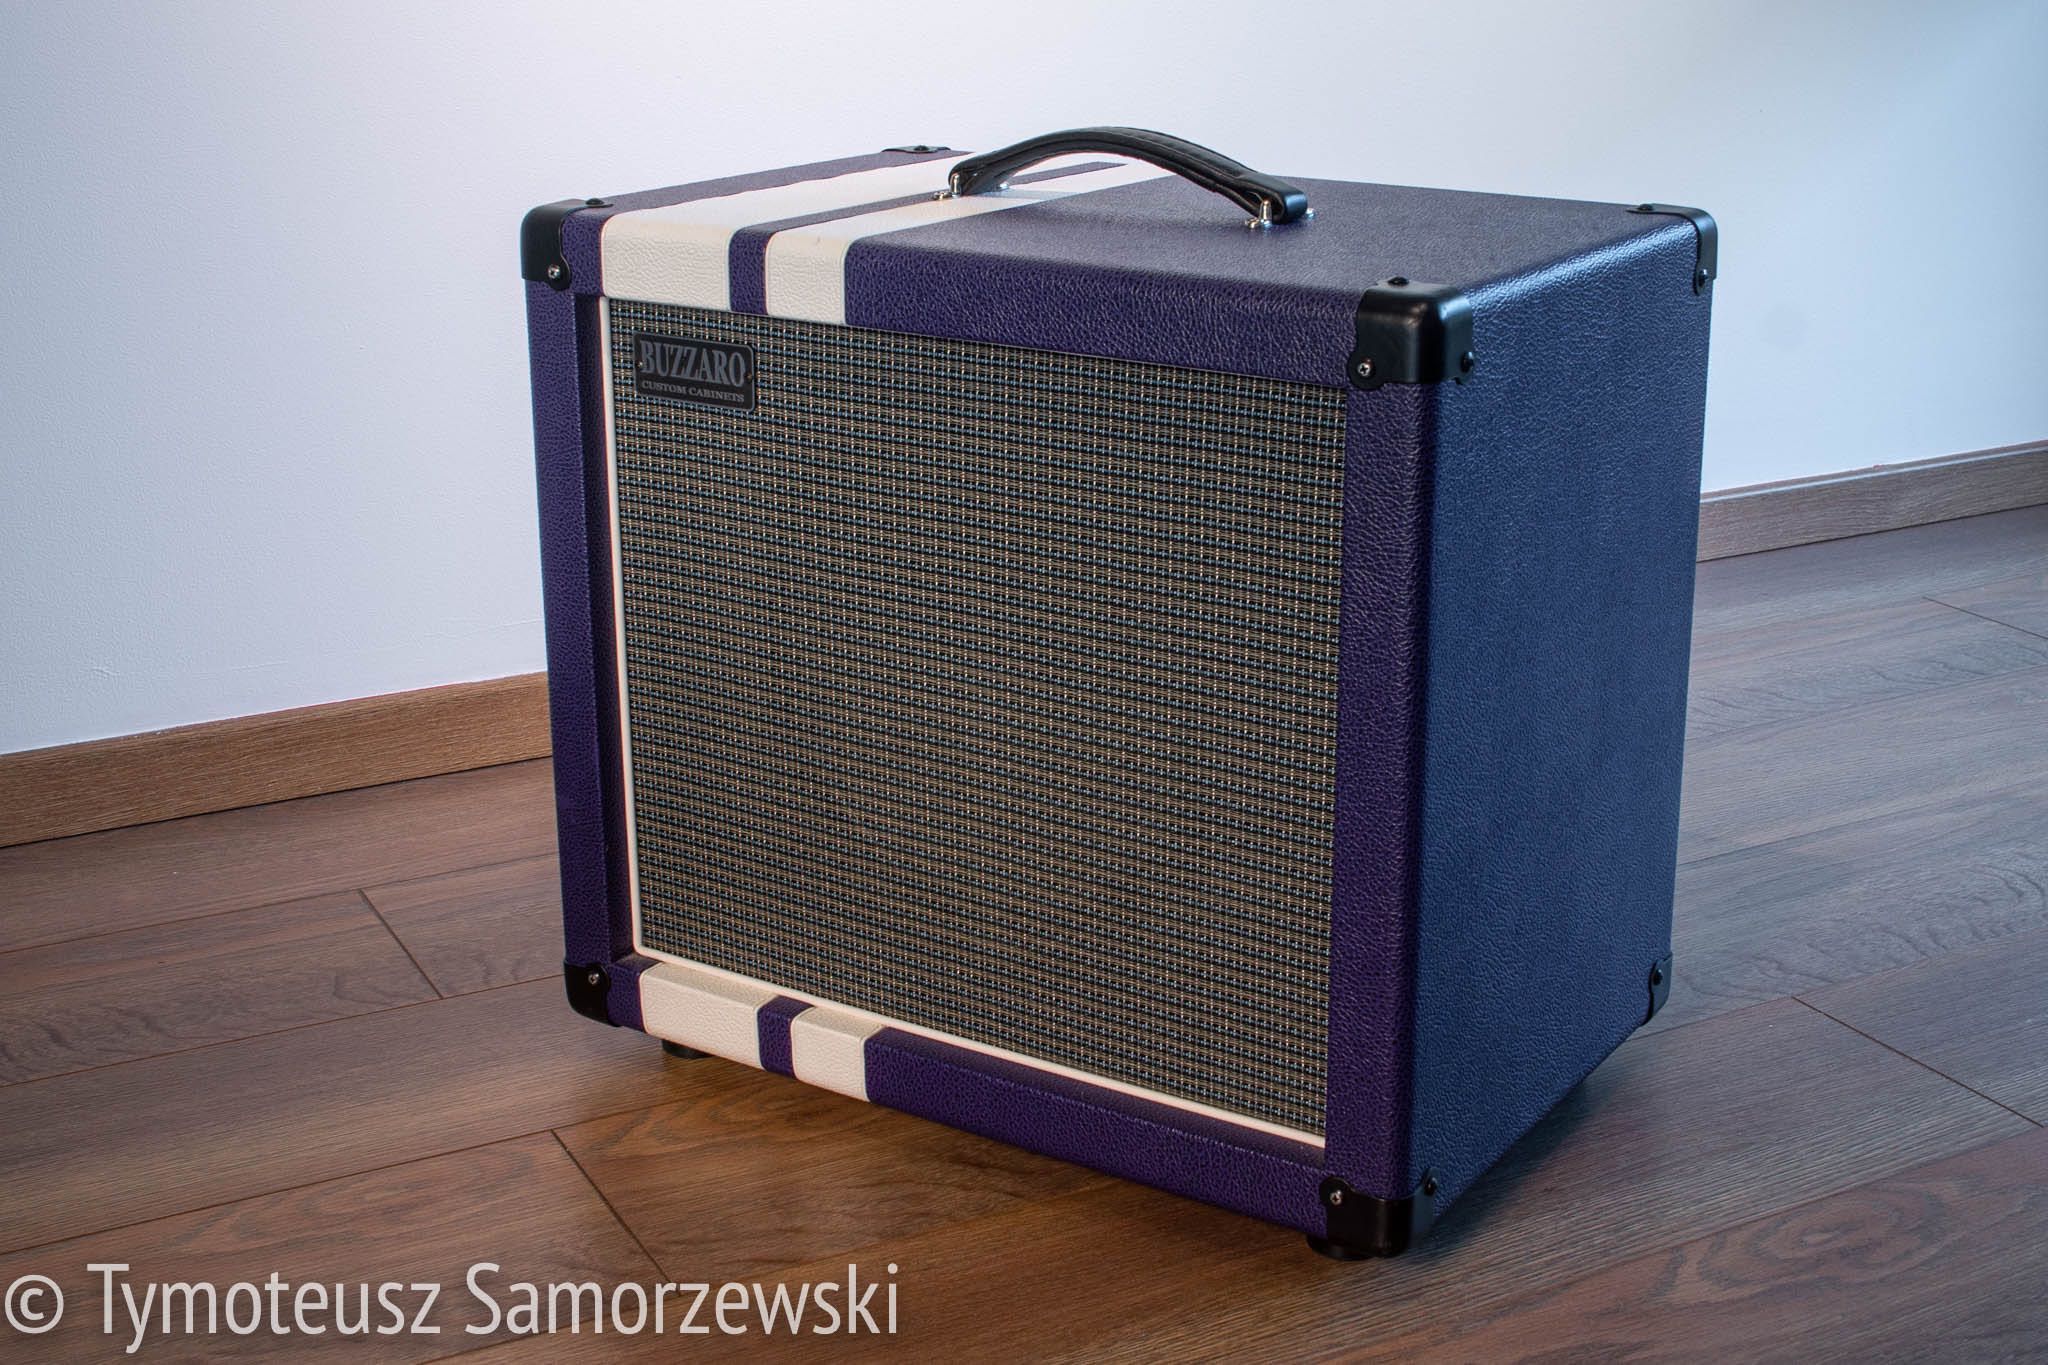 Paczka gitarowa Buzzaro Custom Cabinets 1x12